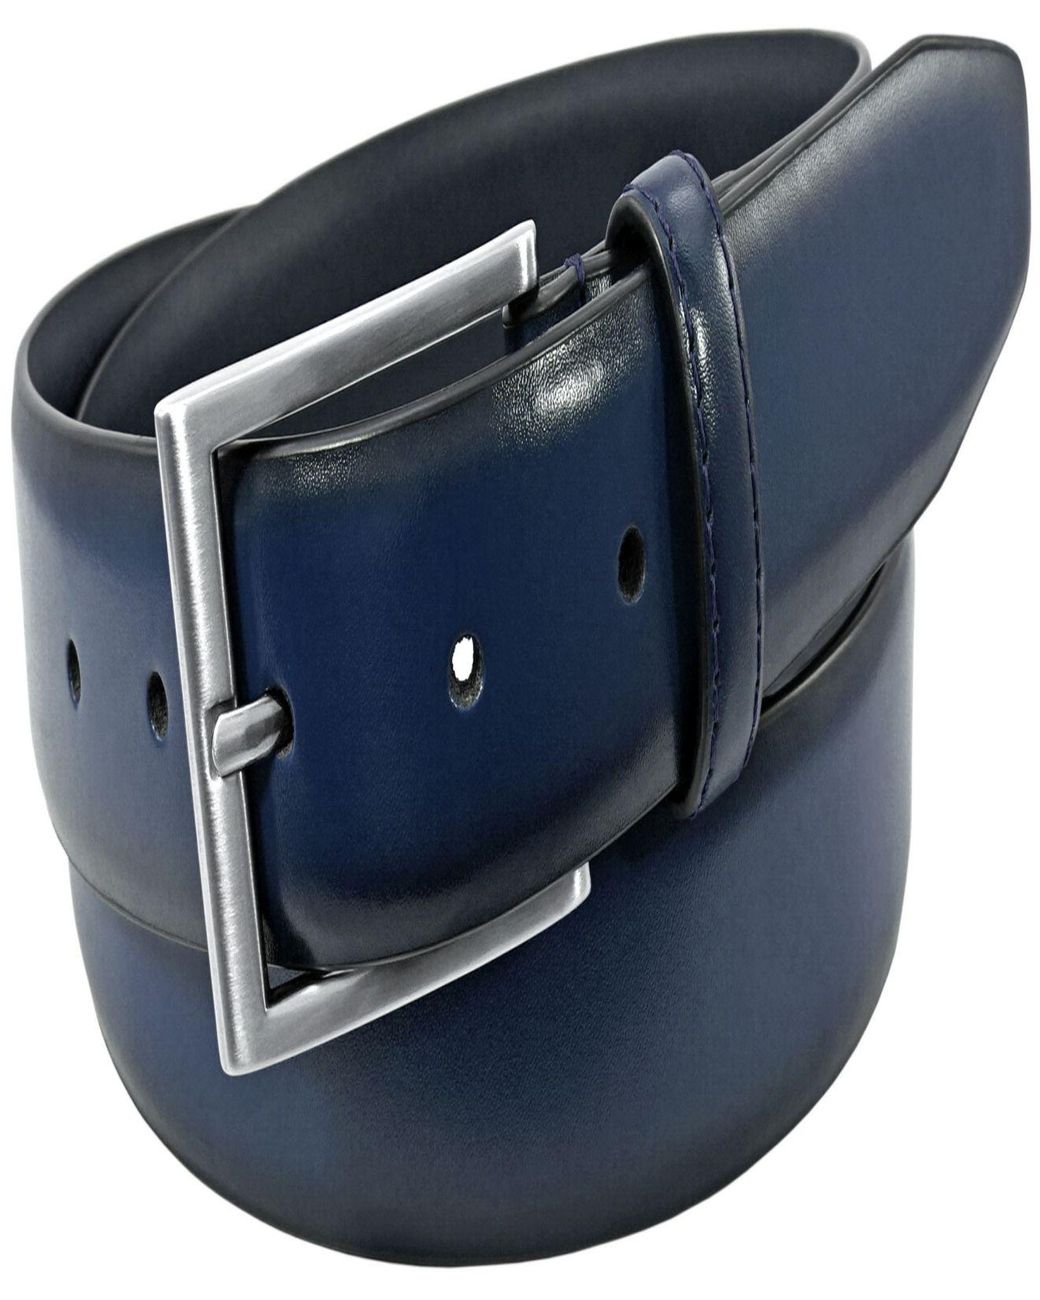 Florsheim Carmine Leather Belt in Navy (Blue) for Men - Lyst